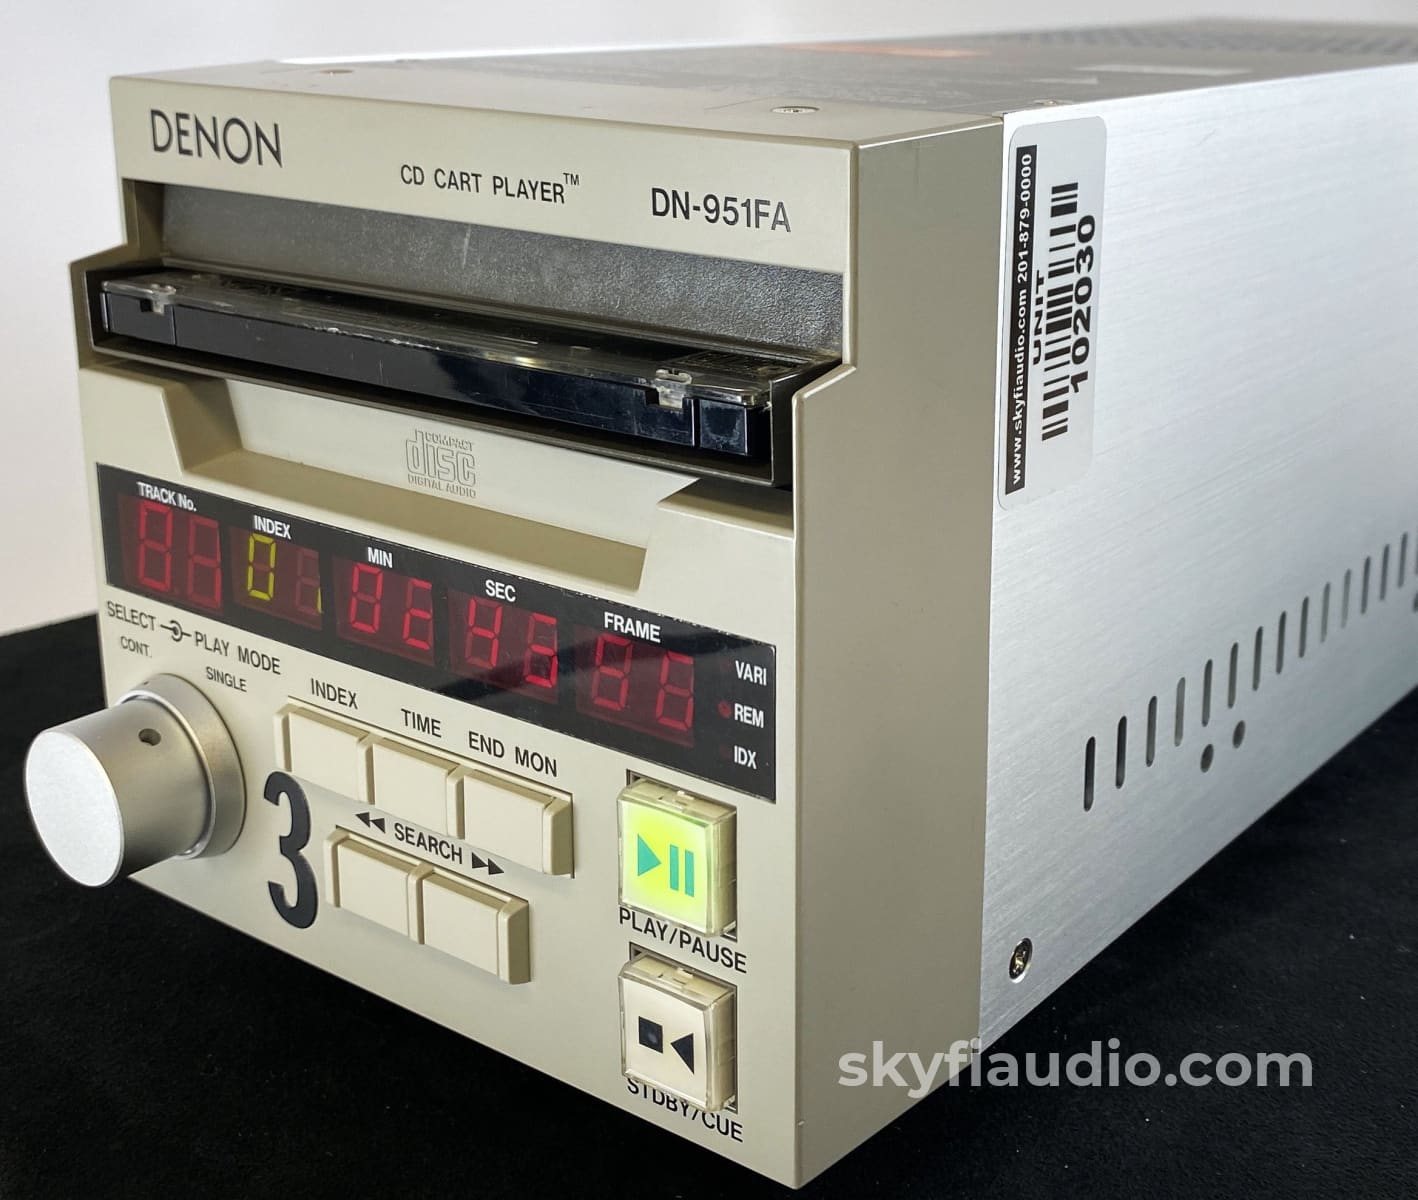 Denon Dn-951Fa Professional Broadcast Quality Cd Player - New In Box! + Digital